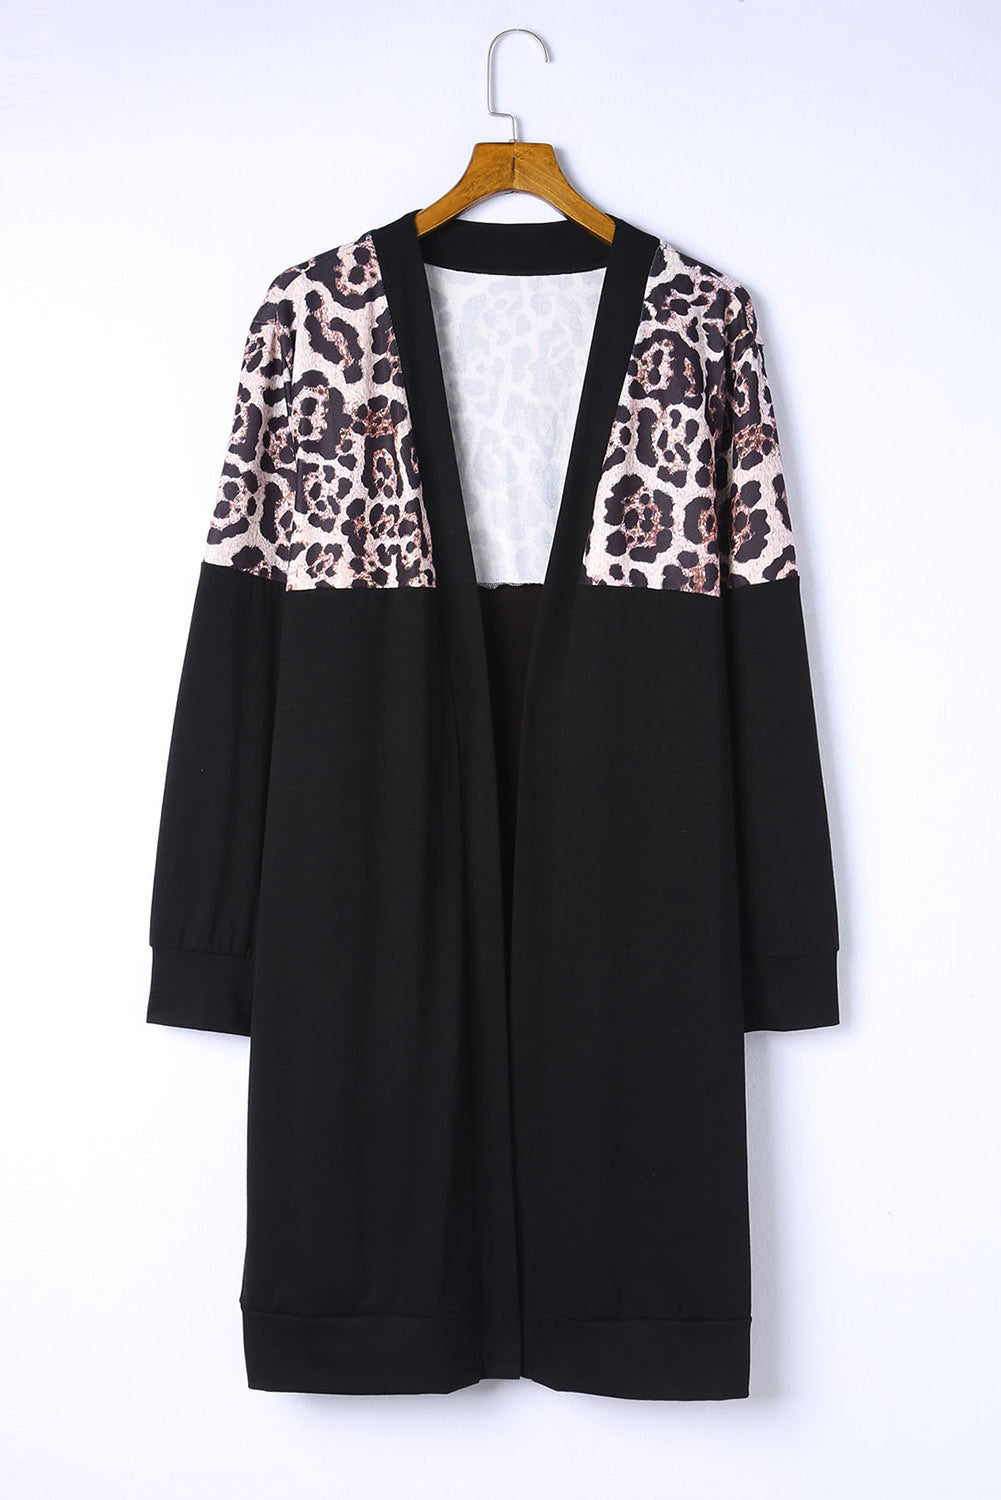 Violeta Black Leopard Detail Plus Size Cardigan